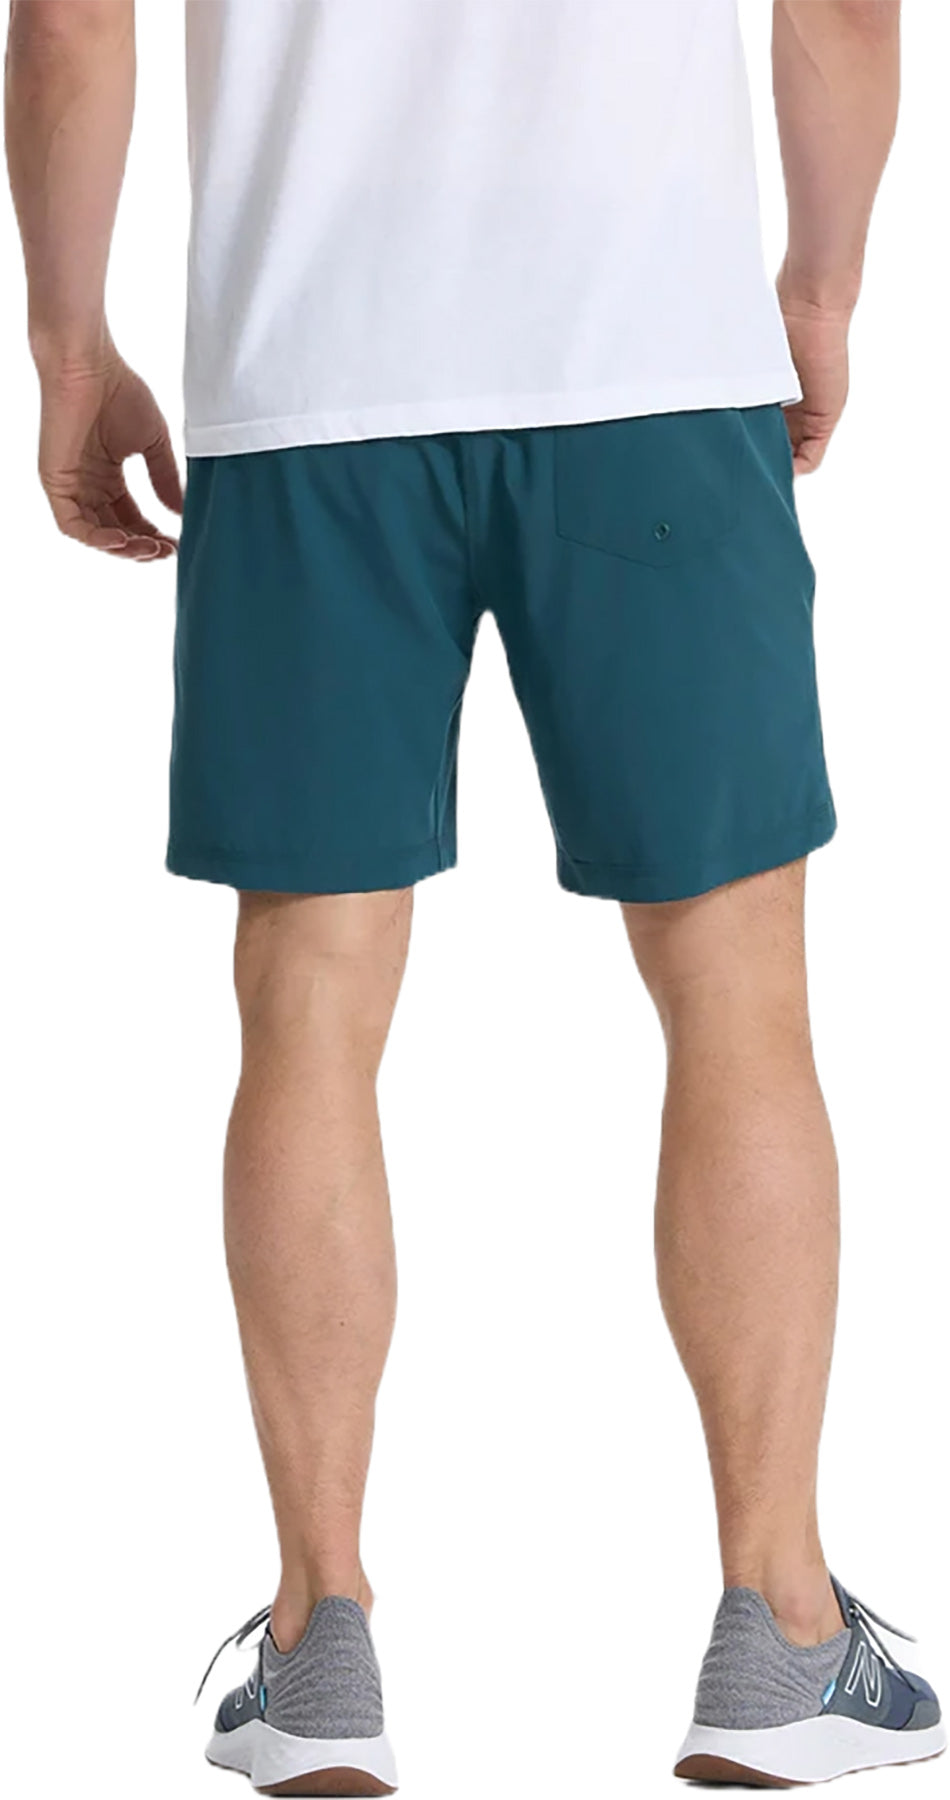 Vuori Ripstop Climber Shorts - Men's